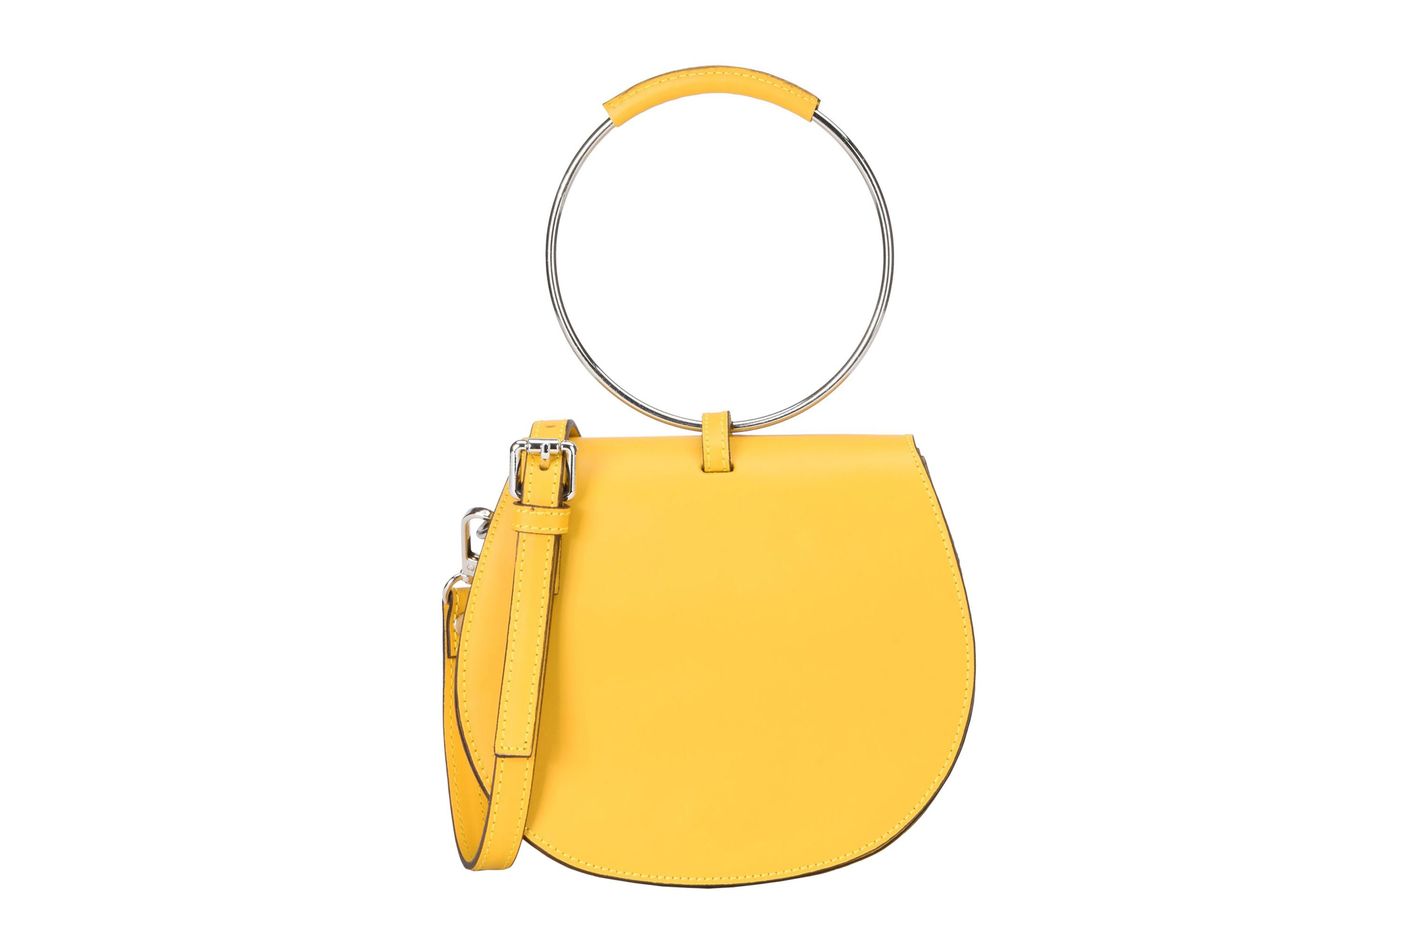 Mini Bag Buying Guide: What Makes a Fashionable Mini Bag?